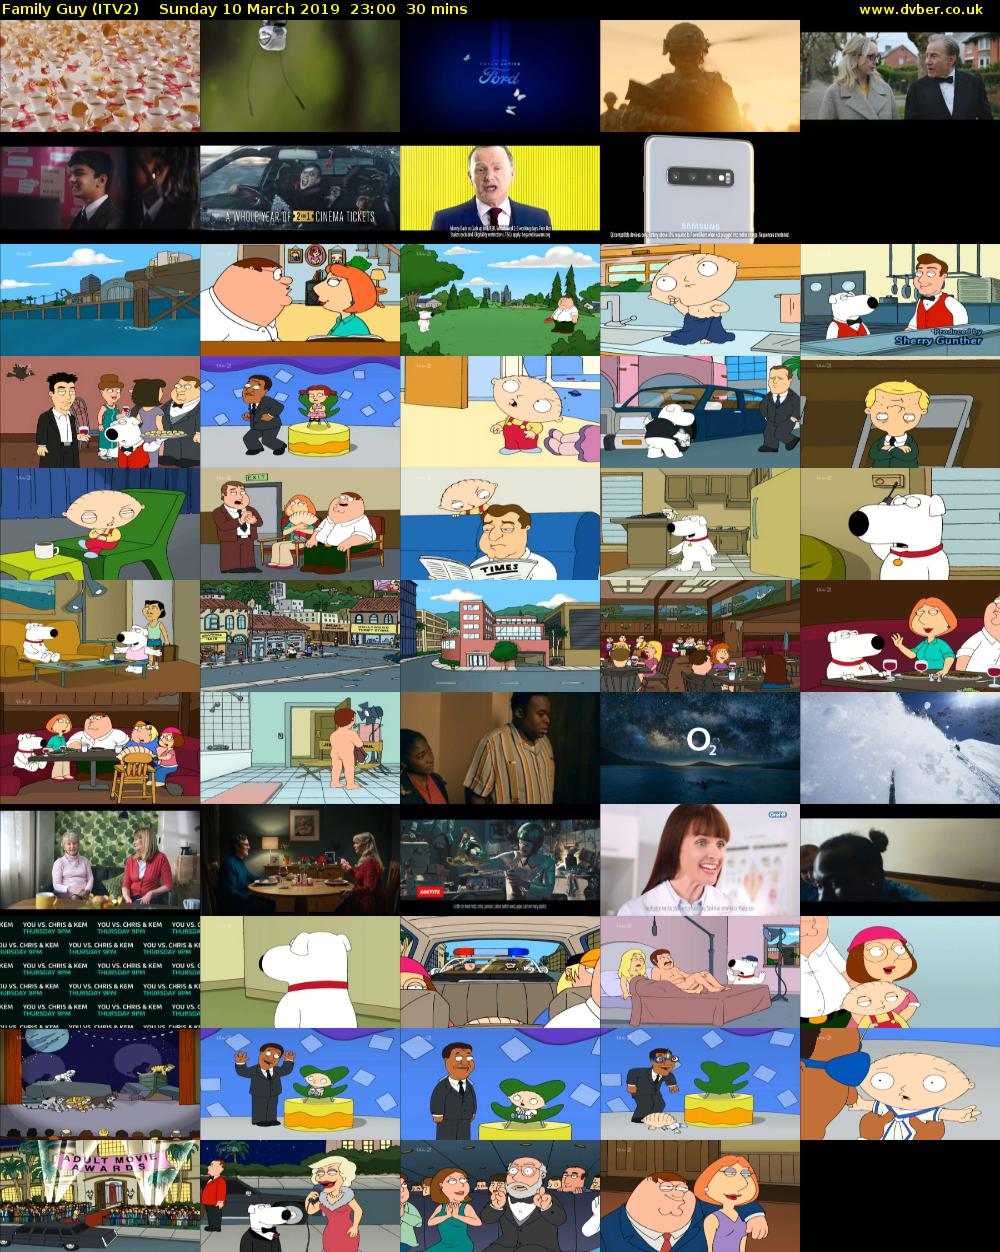 Family Guy (ITV2) Sunday 10 March 2019 23:00 - 23:30